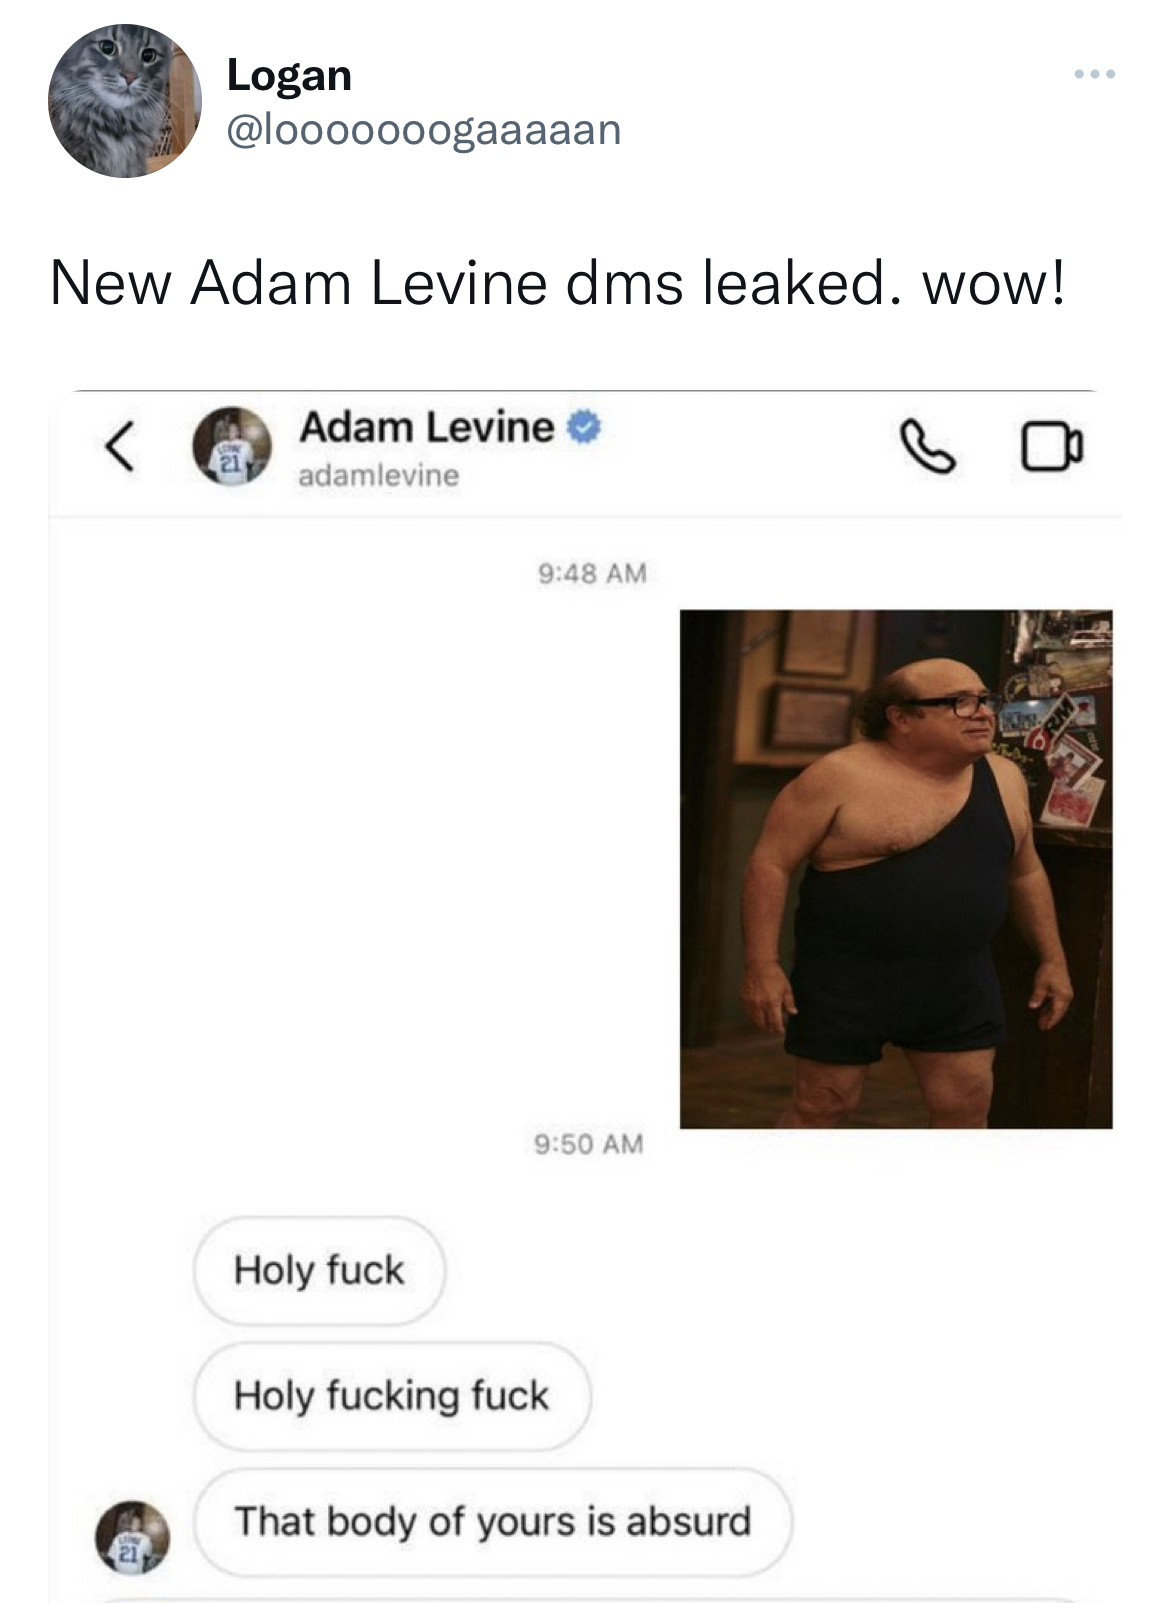 Adam Levine Sexting memes - shoulder - Logan